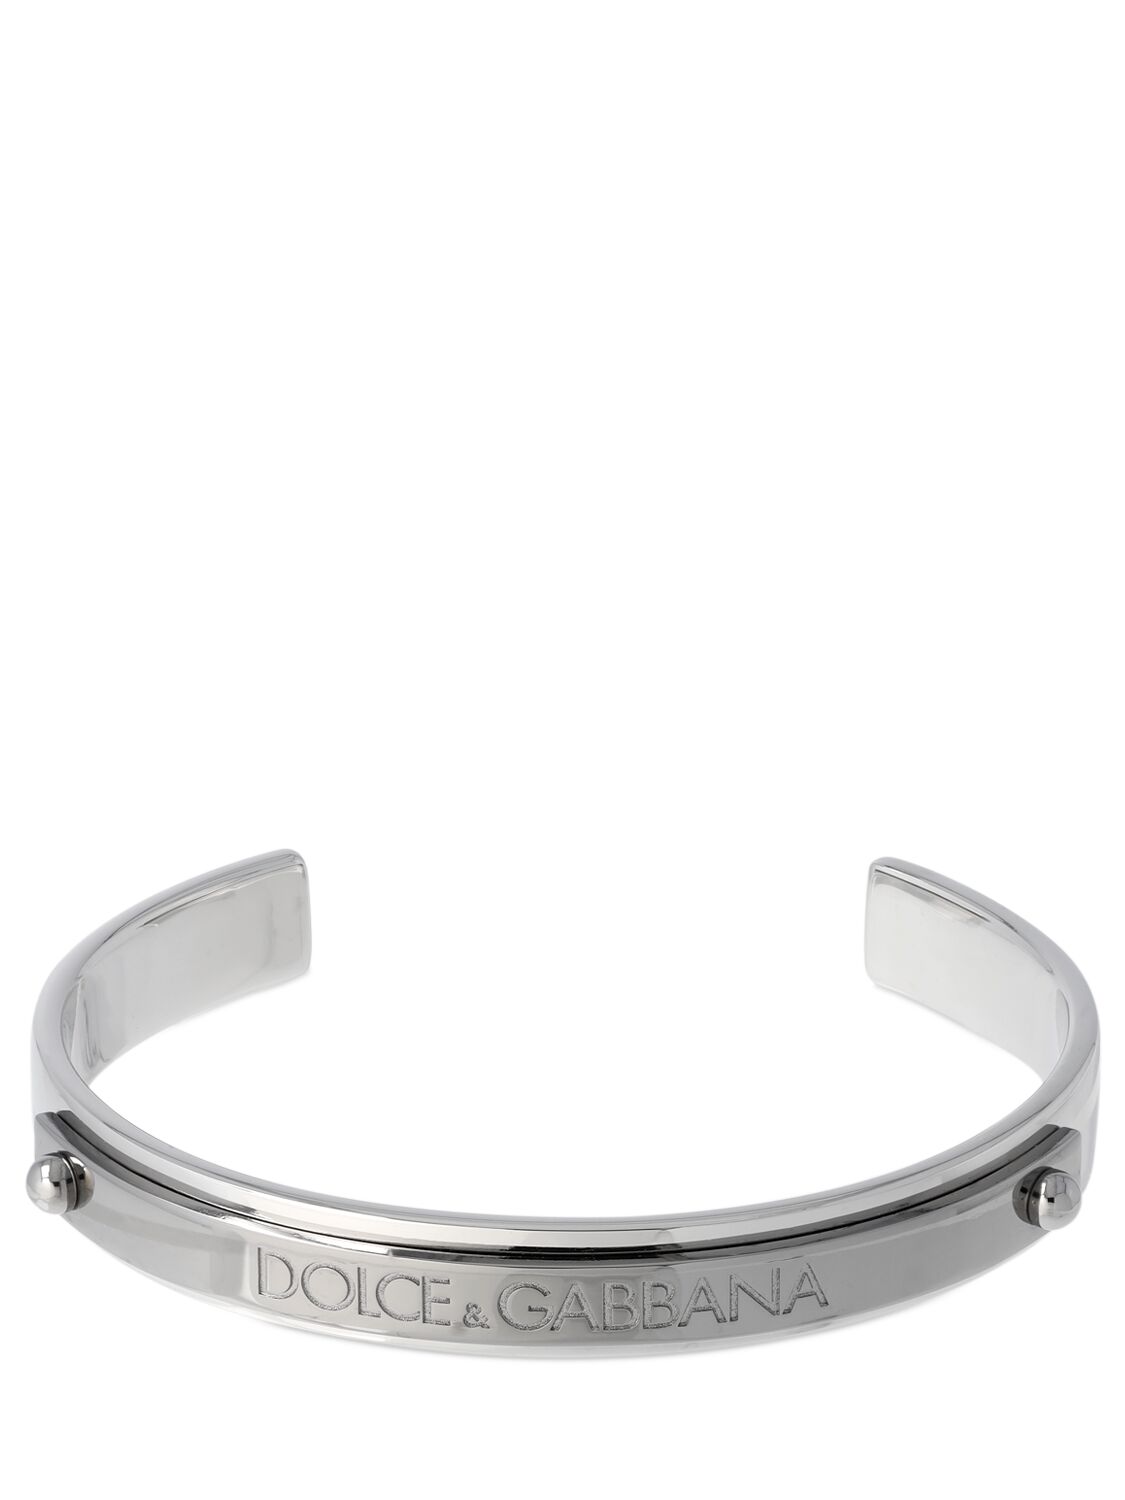 Dolce & Gabbana Dg Logo Cuff Bracelet In Metallic